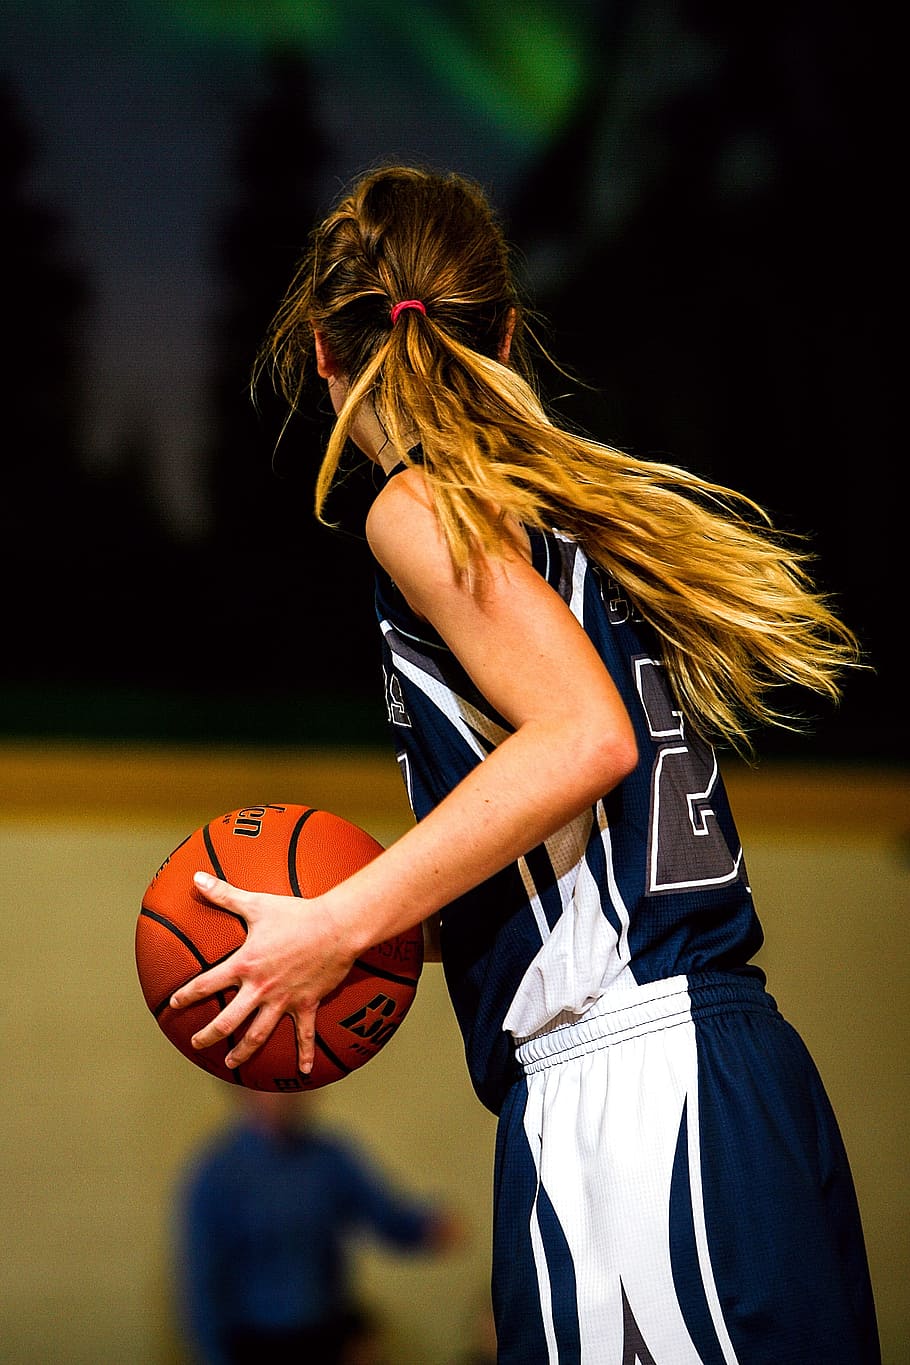 woman holding basketball, basketball, player, girls basketball, girl, ball, sport, game, athlete, competition